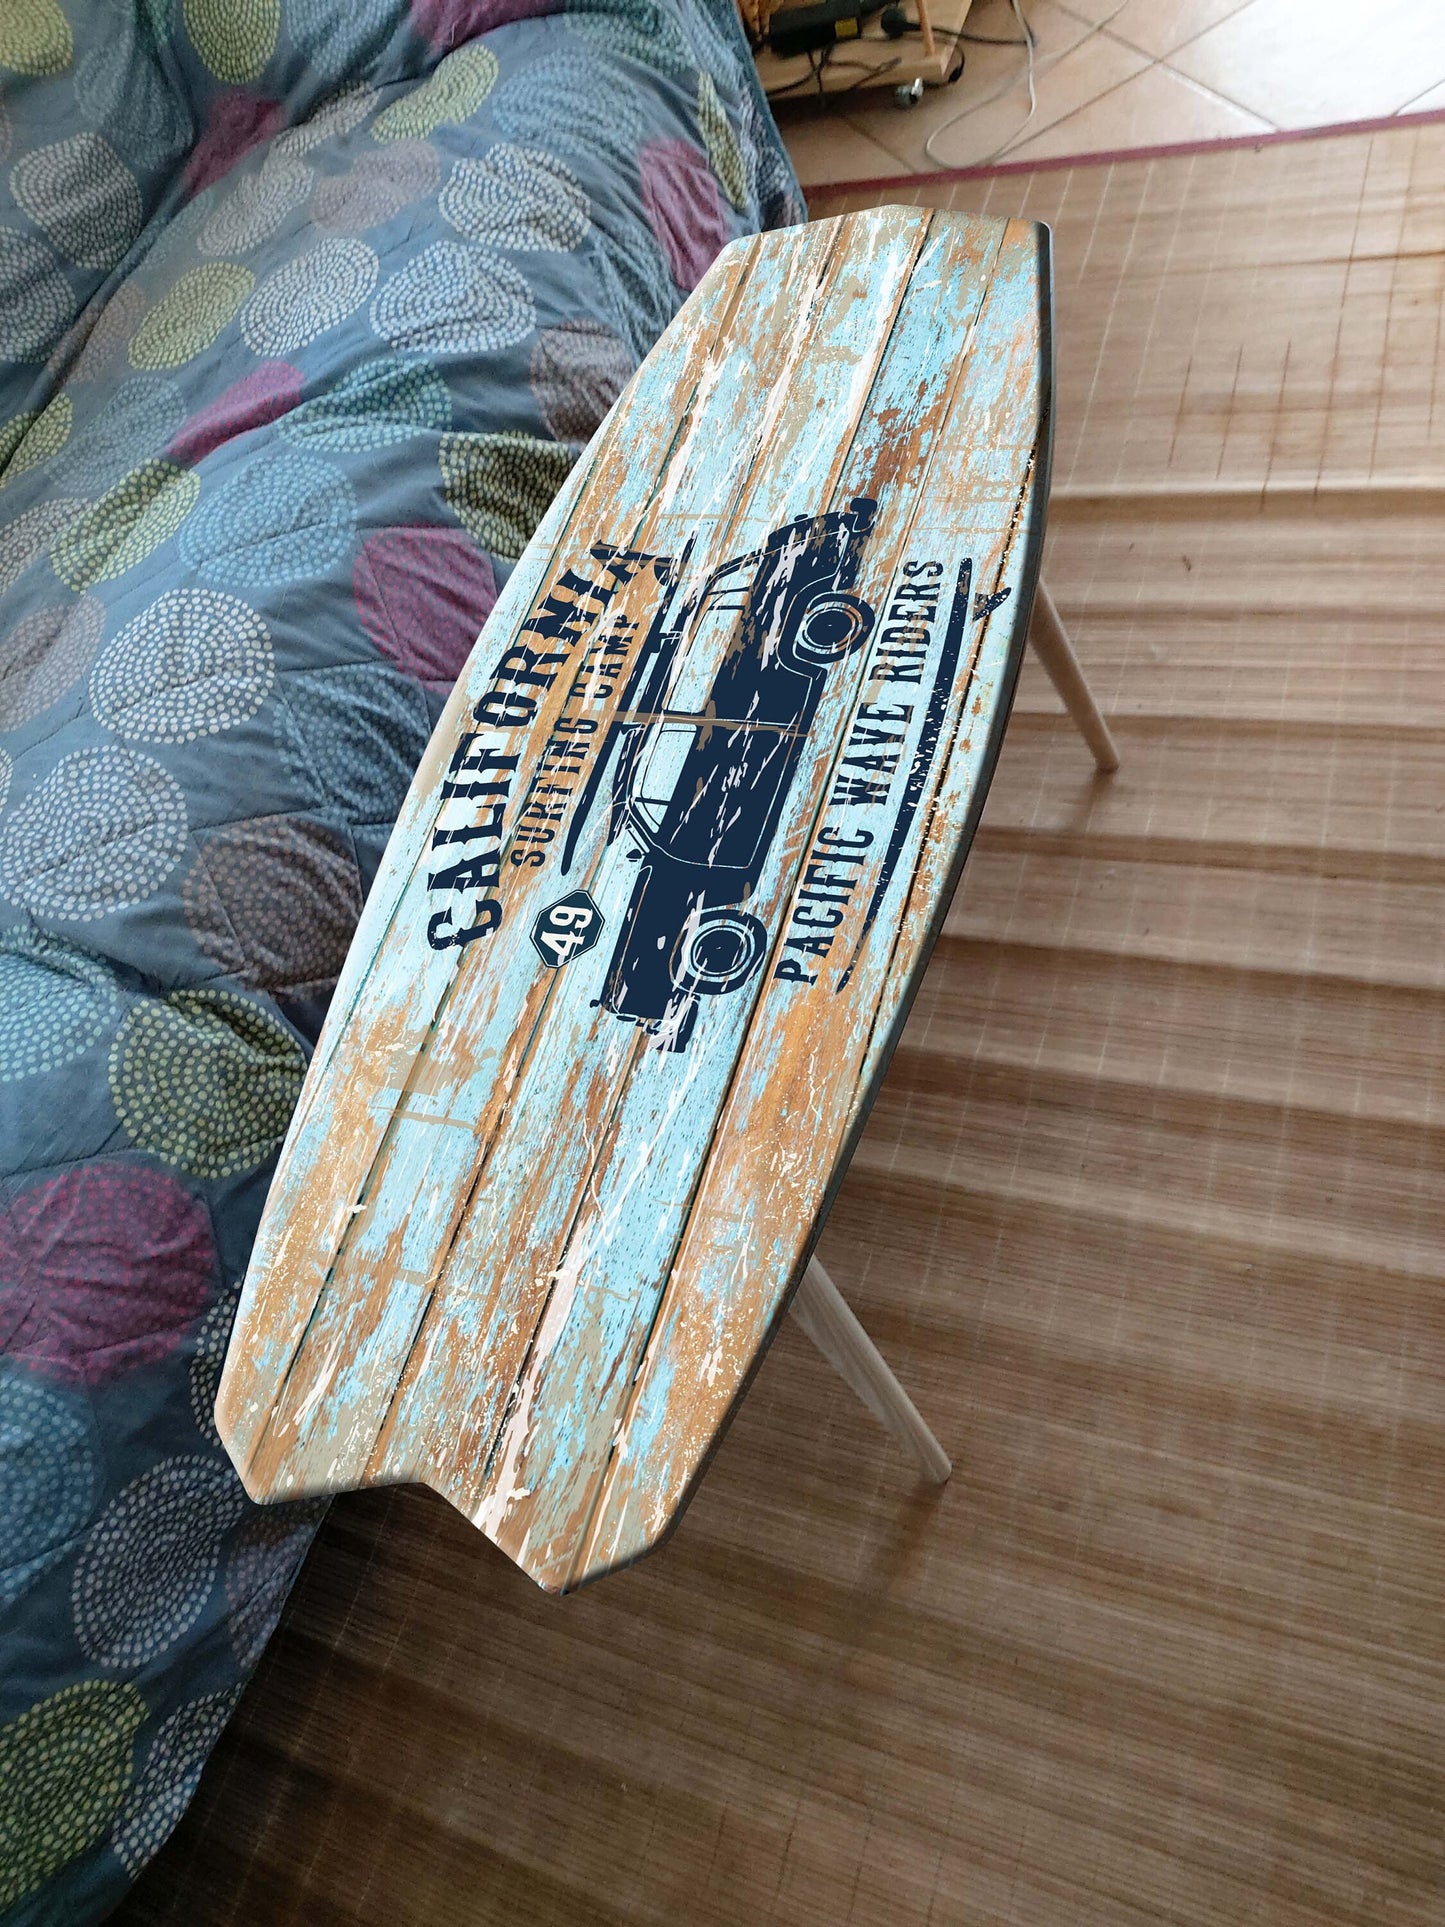 Surfboard Bar Coffee Table - Surfing Camp California